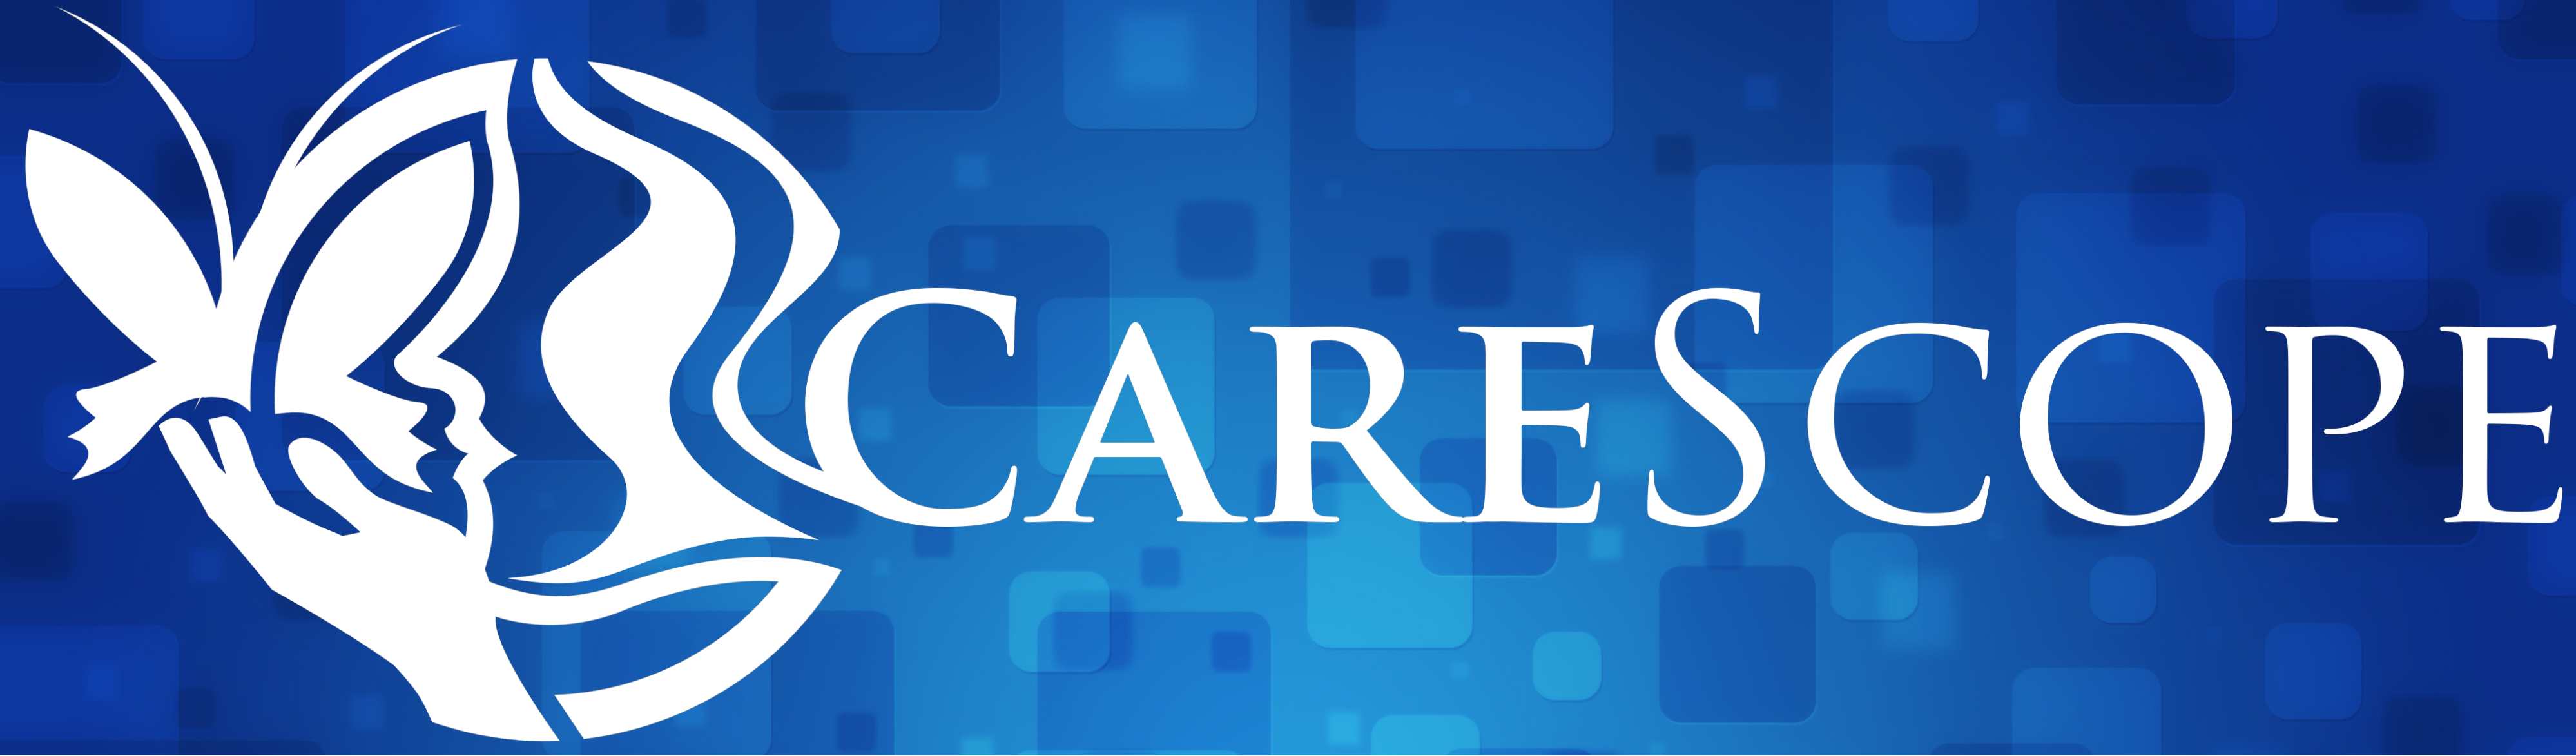 CareScope - In home care team